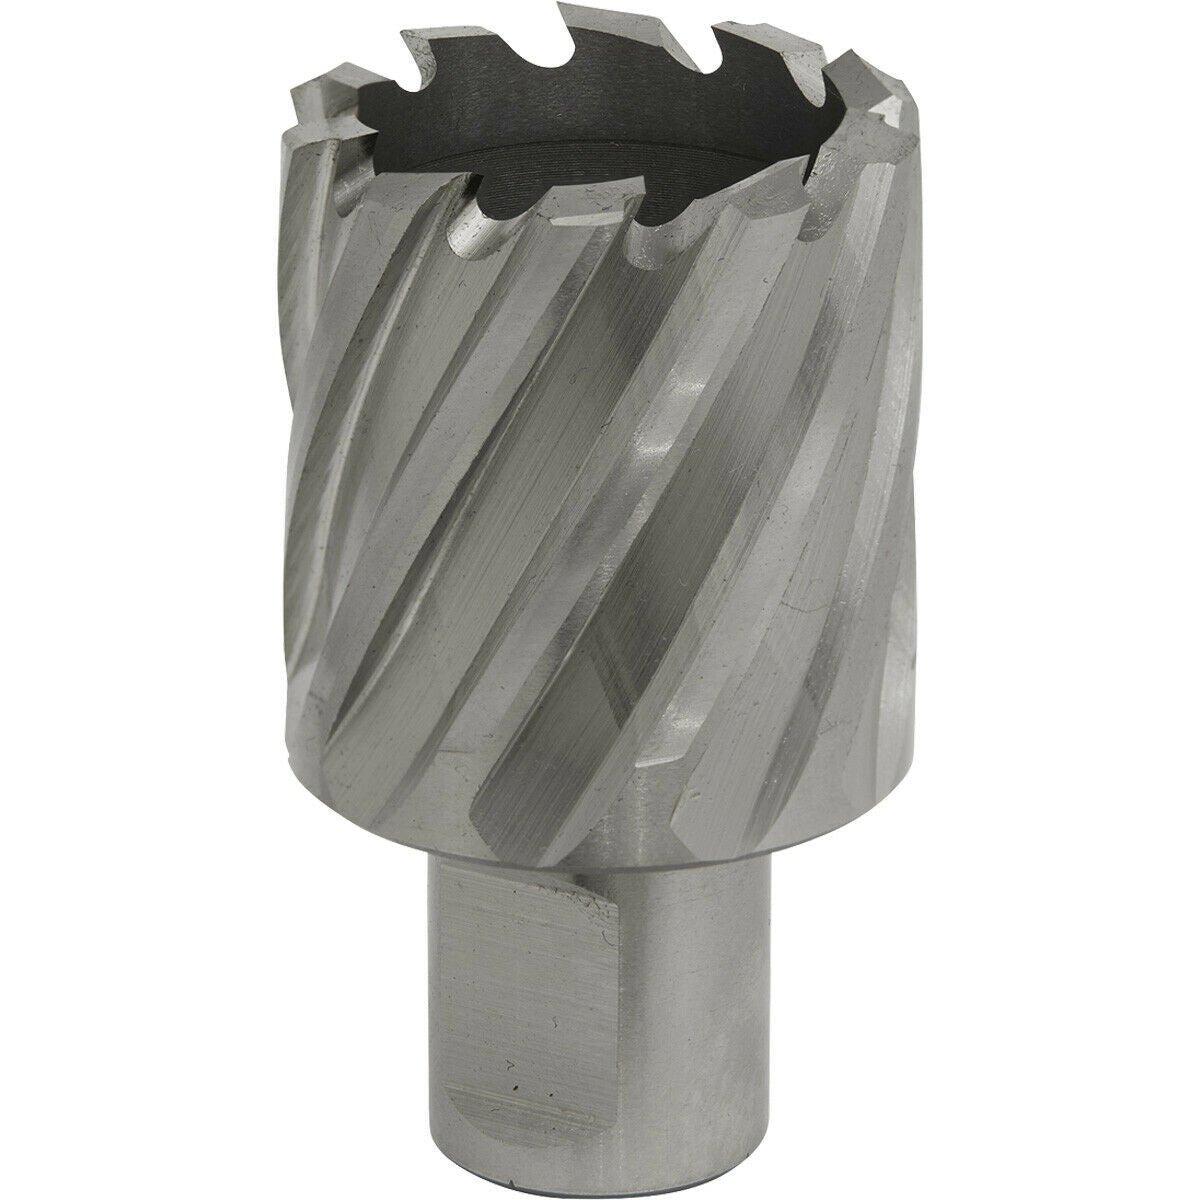 34mm x 25mm Depth Rotabor Cutter - M2 Steel Annular Metal Core Drill 19mm Shank